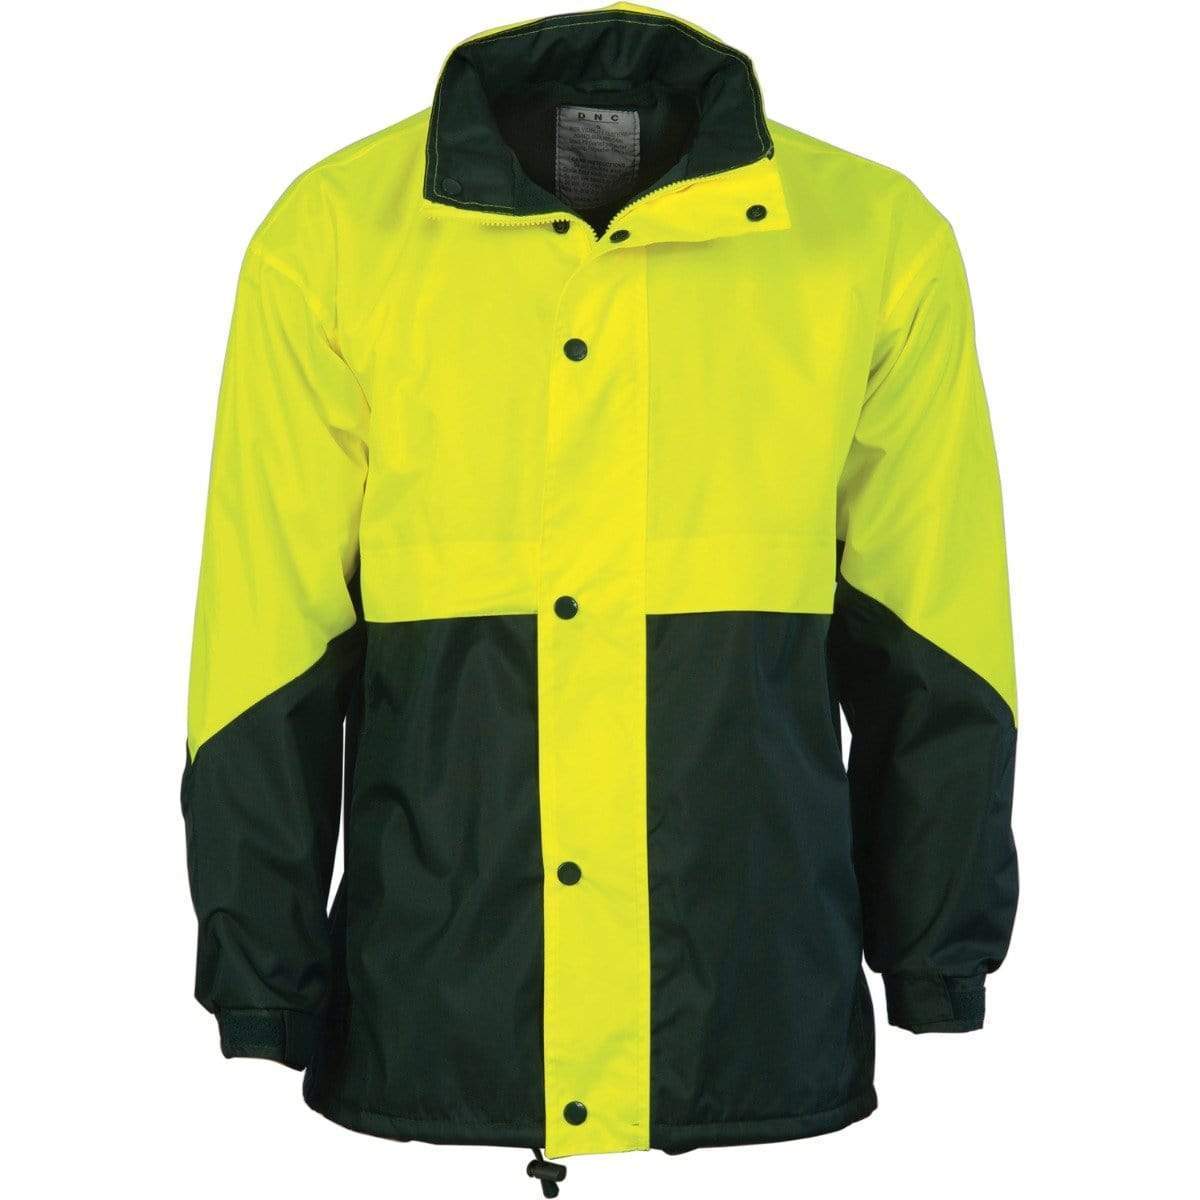 Dnc Workwear Hi-vis Two-tone Classic Jacket - 3866 Work Wear DNC Workwear Yellow/Bottle Green S 